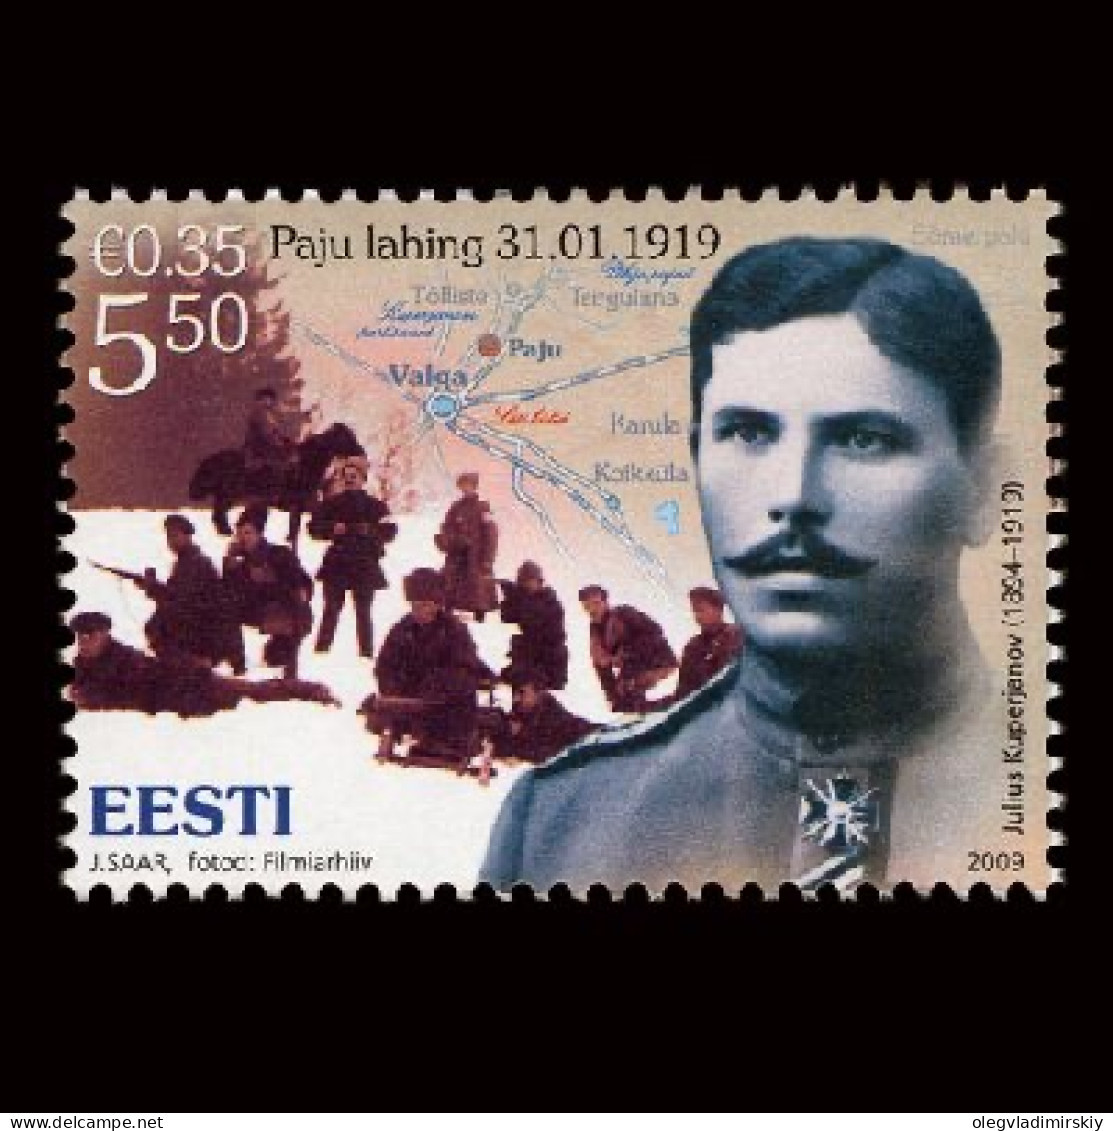 Estonia Estland 2009 Independence War 1919 Paju Battle Stamp Mint - Trains